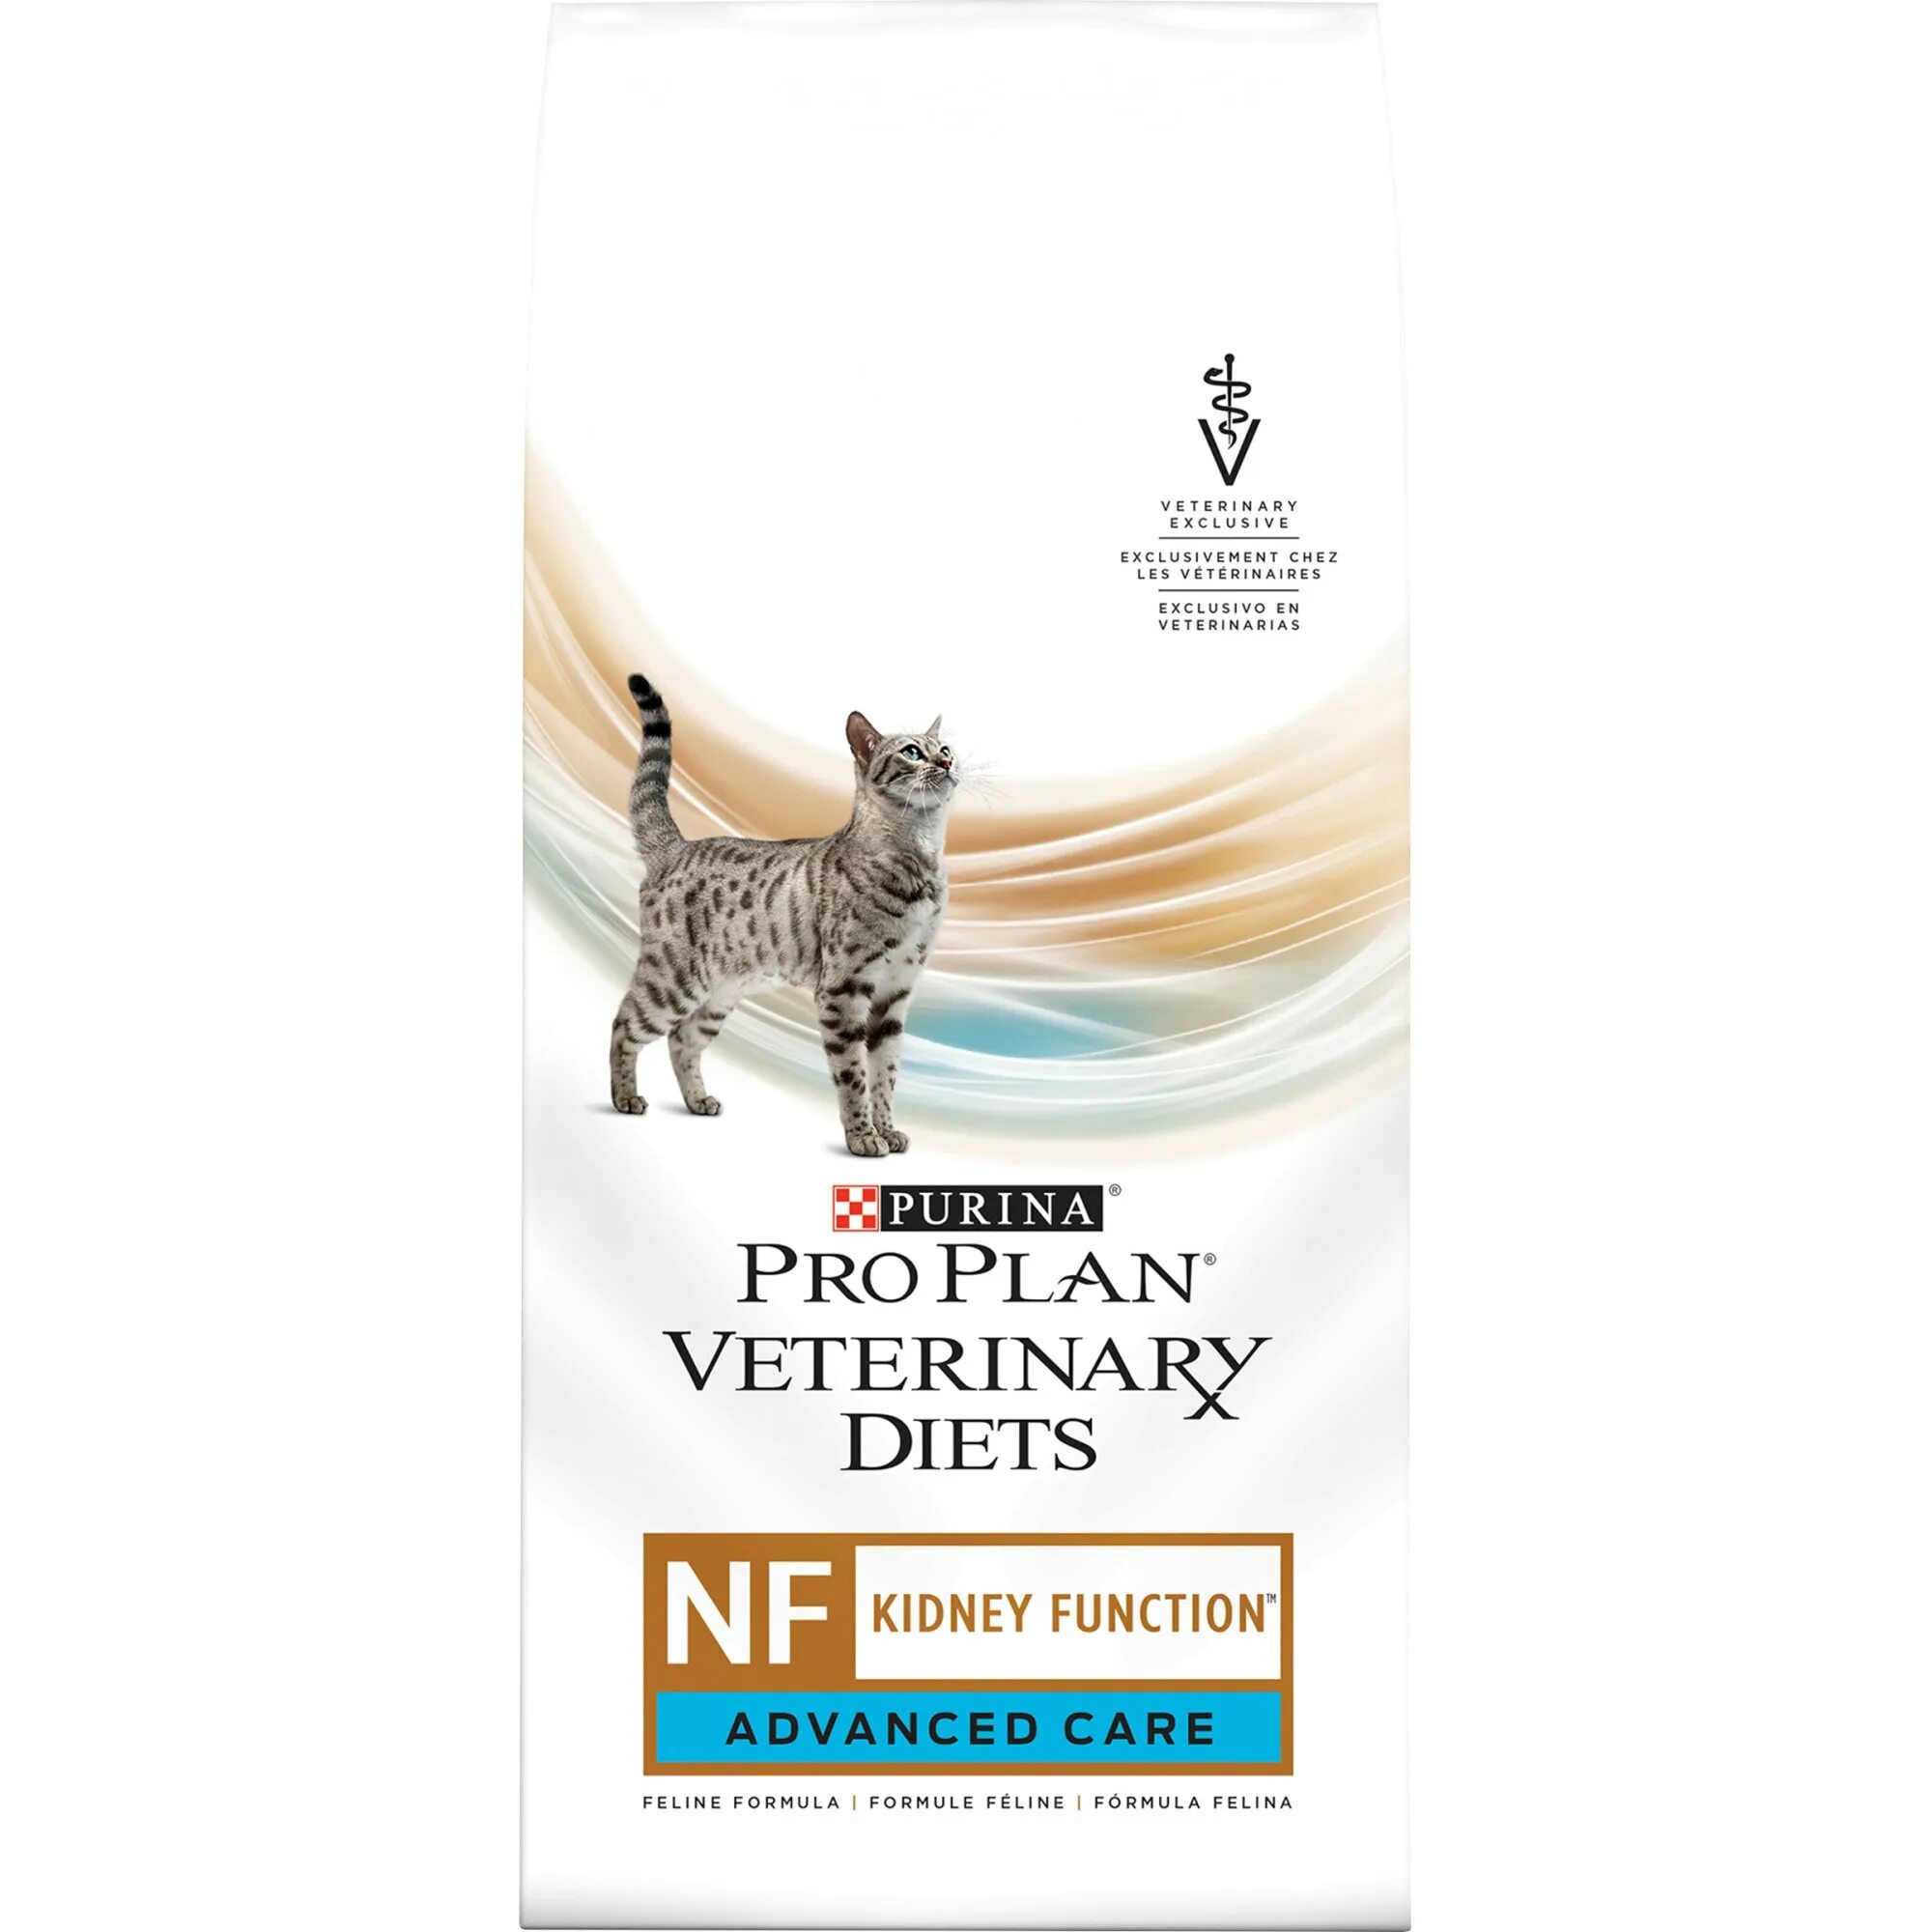 Корм проплан ренал кошкам купить. Purina Pro Plan Veterinary Diets NF renal function Advanced Care. Pro Plan NF для кошек Advanced Care. Проплан ветеринарная диета NF. Проплан ветеринарная диета для кошек NF.